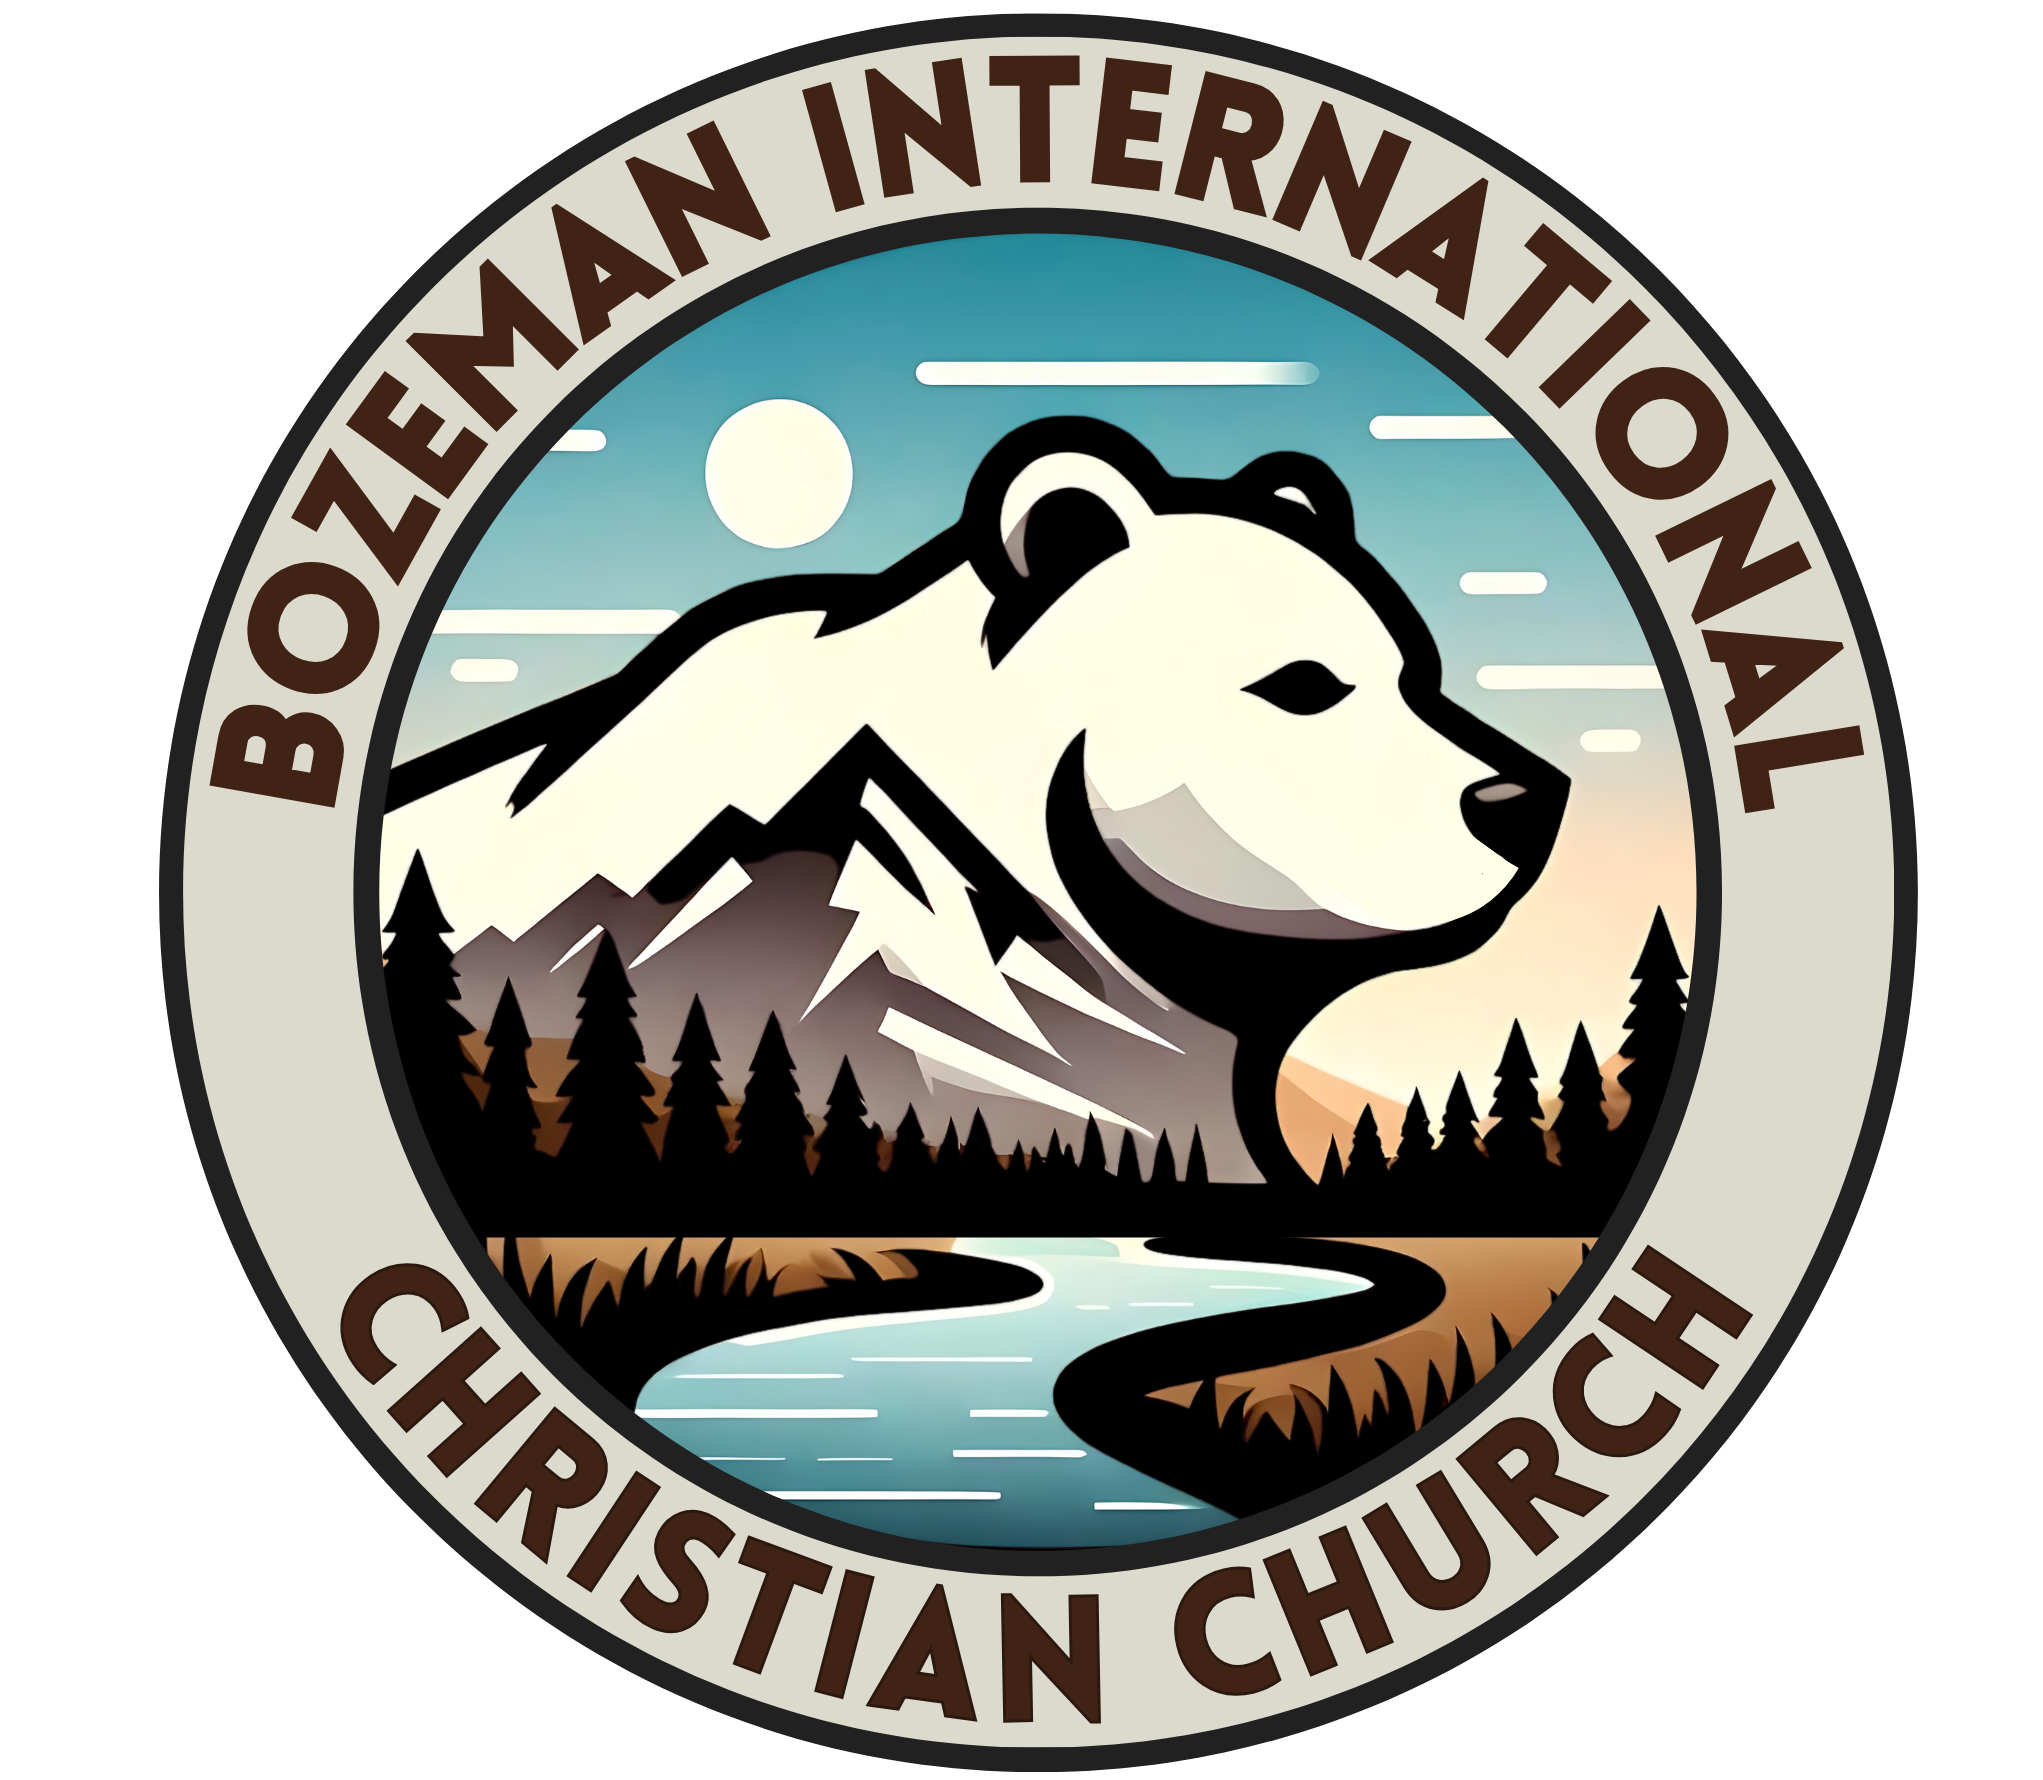 Bozeman International Christian Church